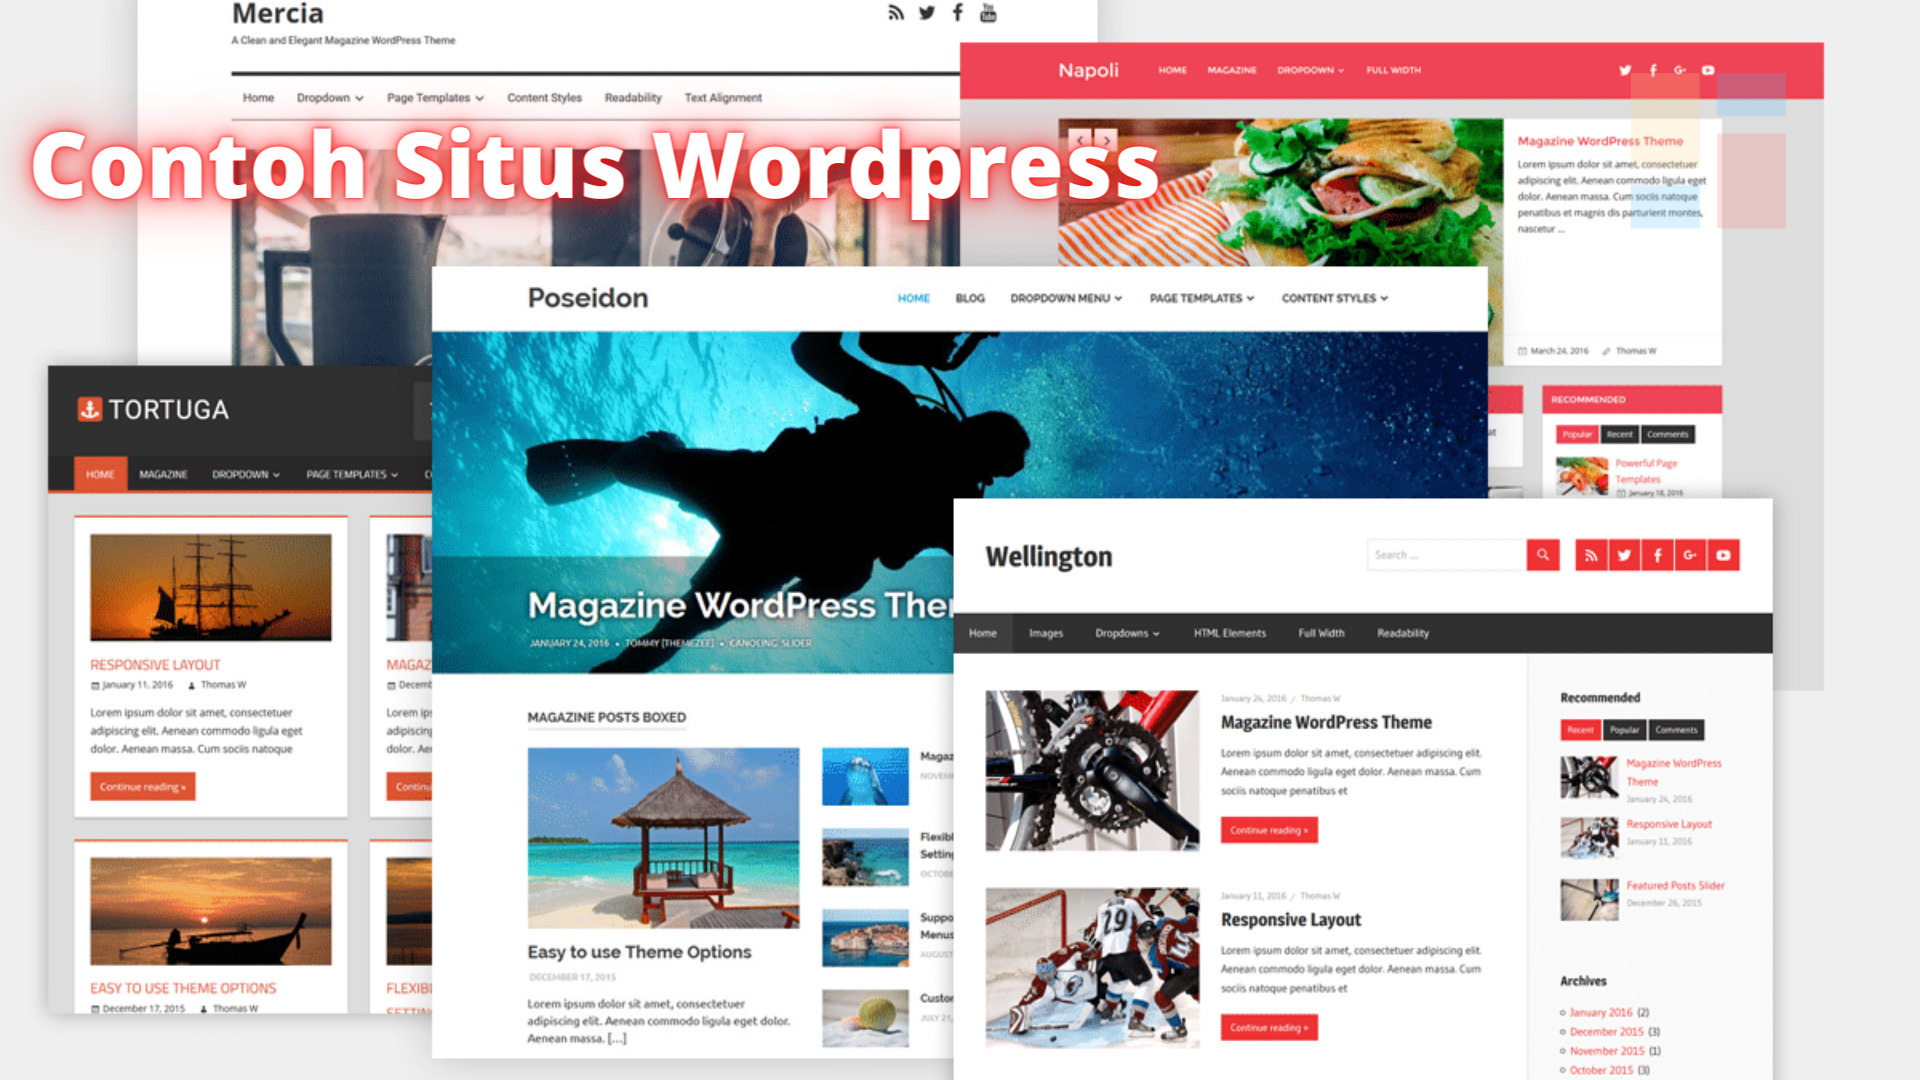 Contoh Situs Wordpress